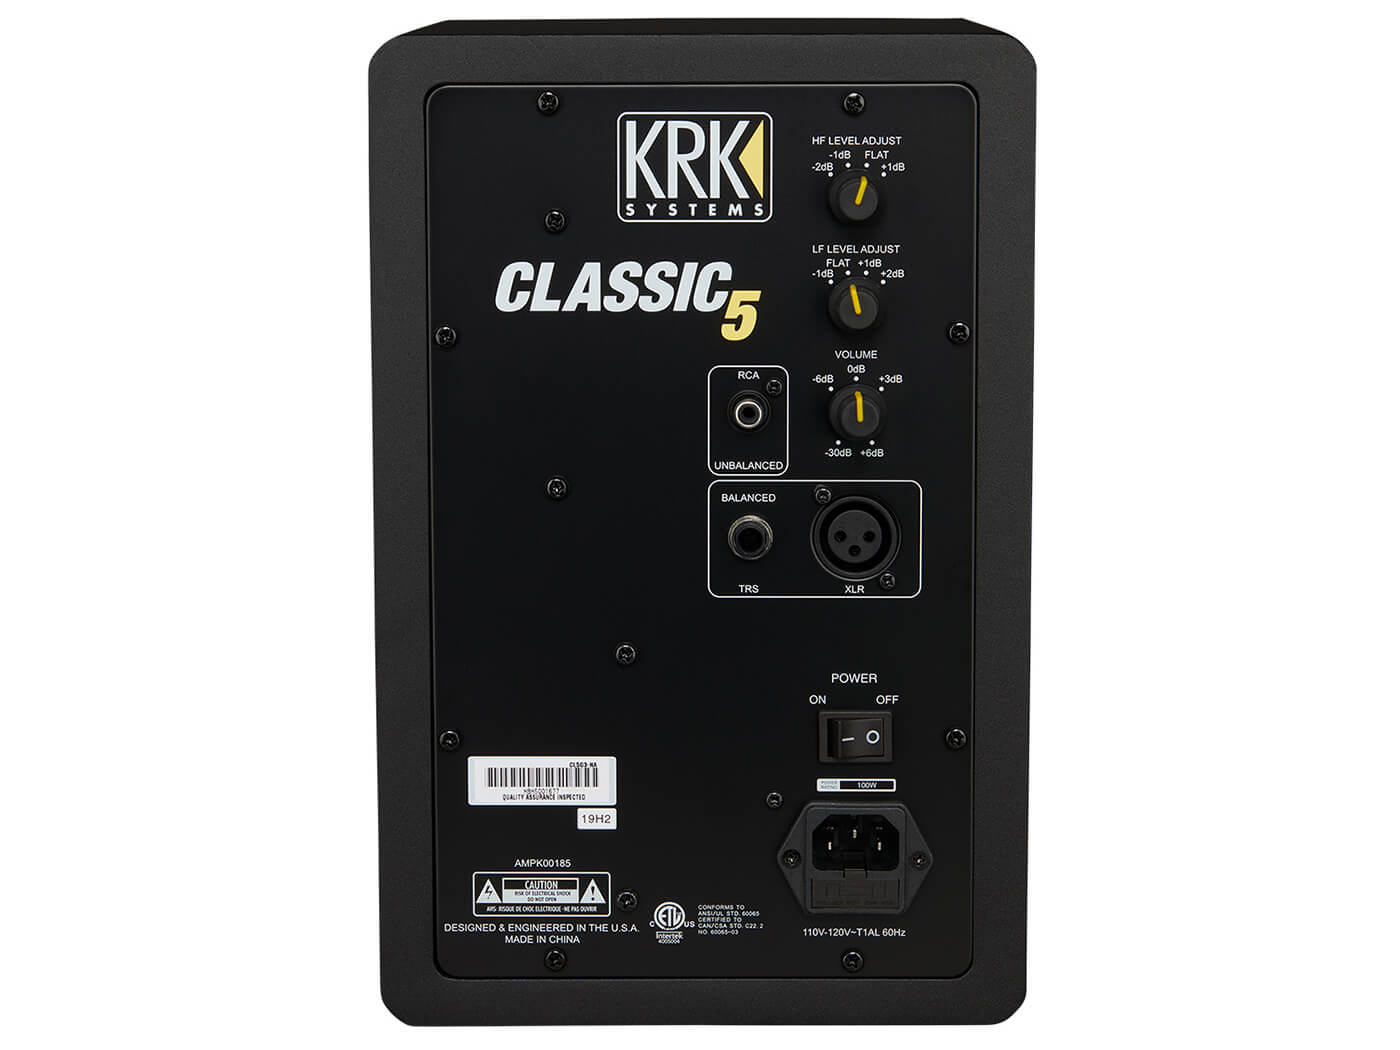 KRK Classic 5 rearview